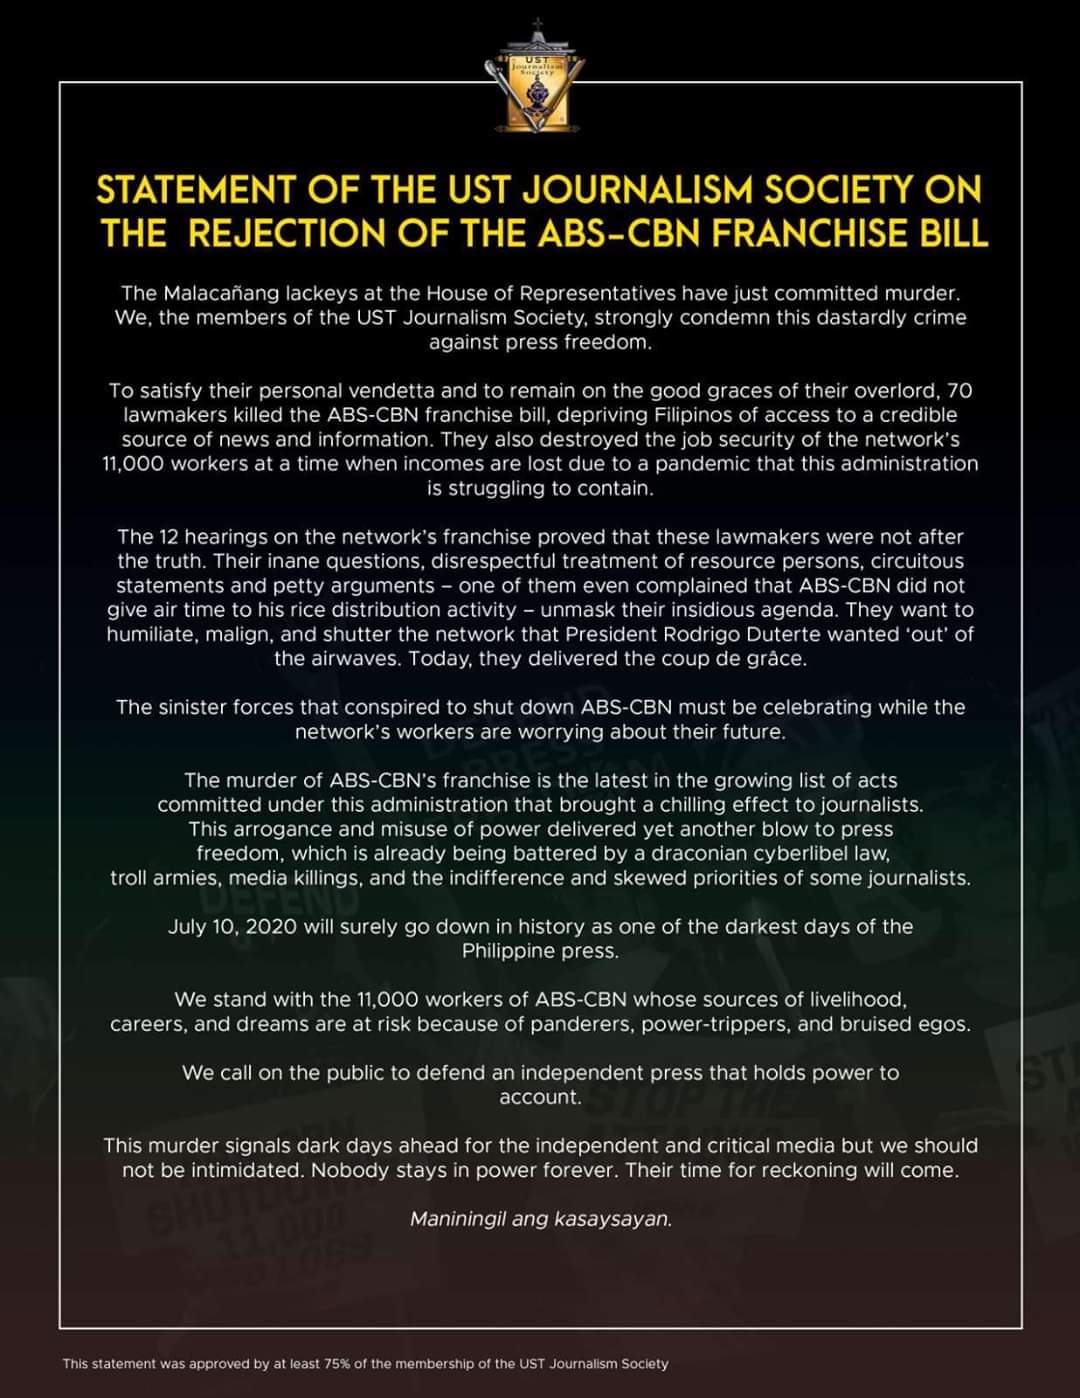 Journsoc condemns ABS-CBN franchise denial